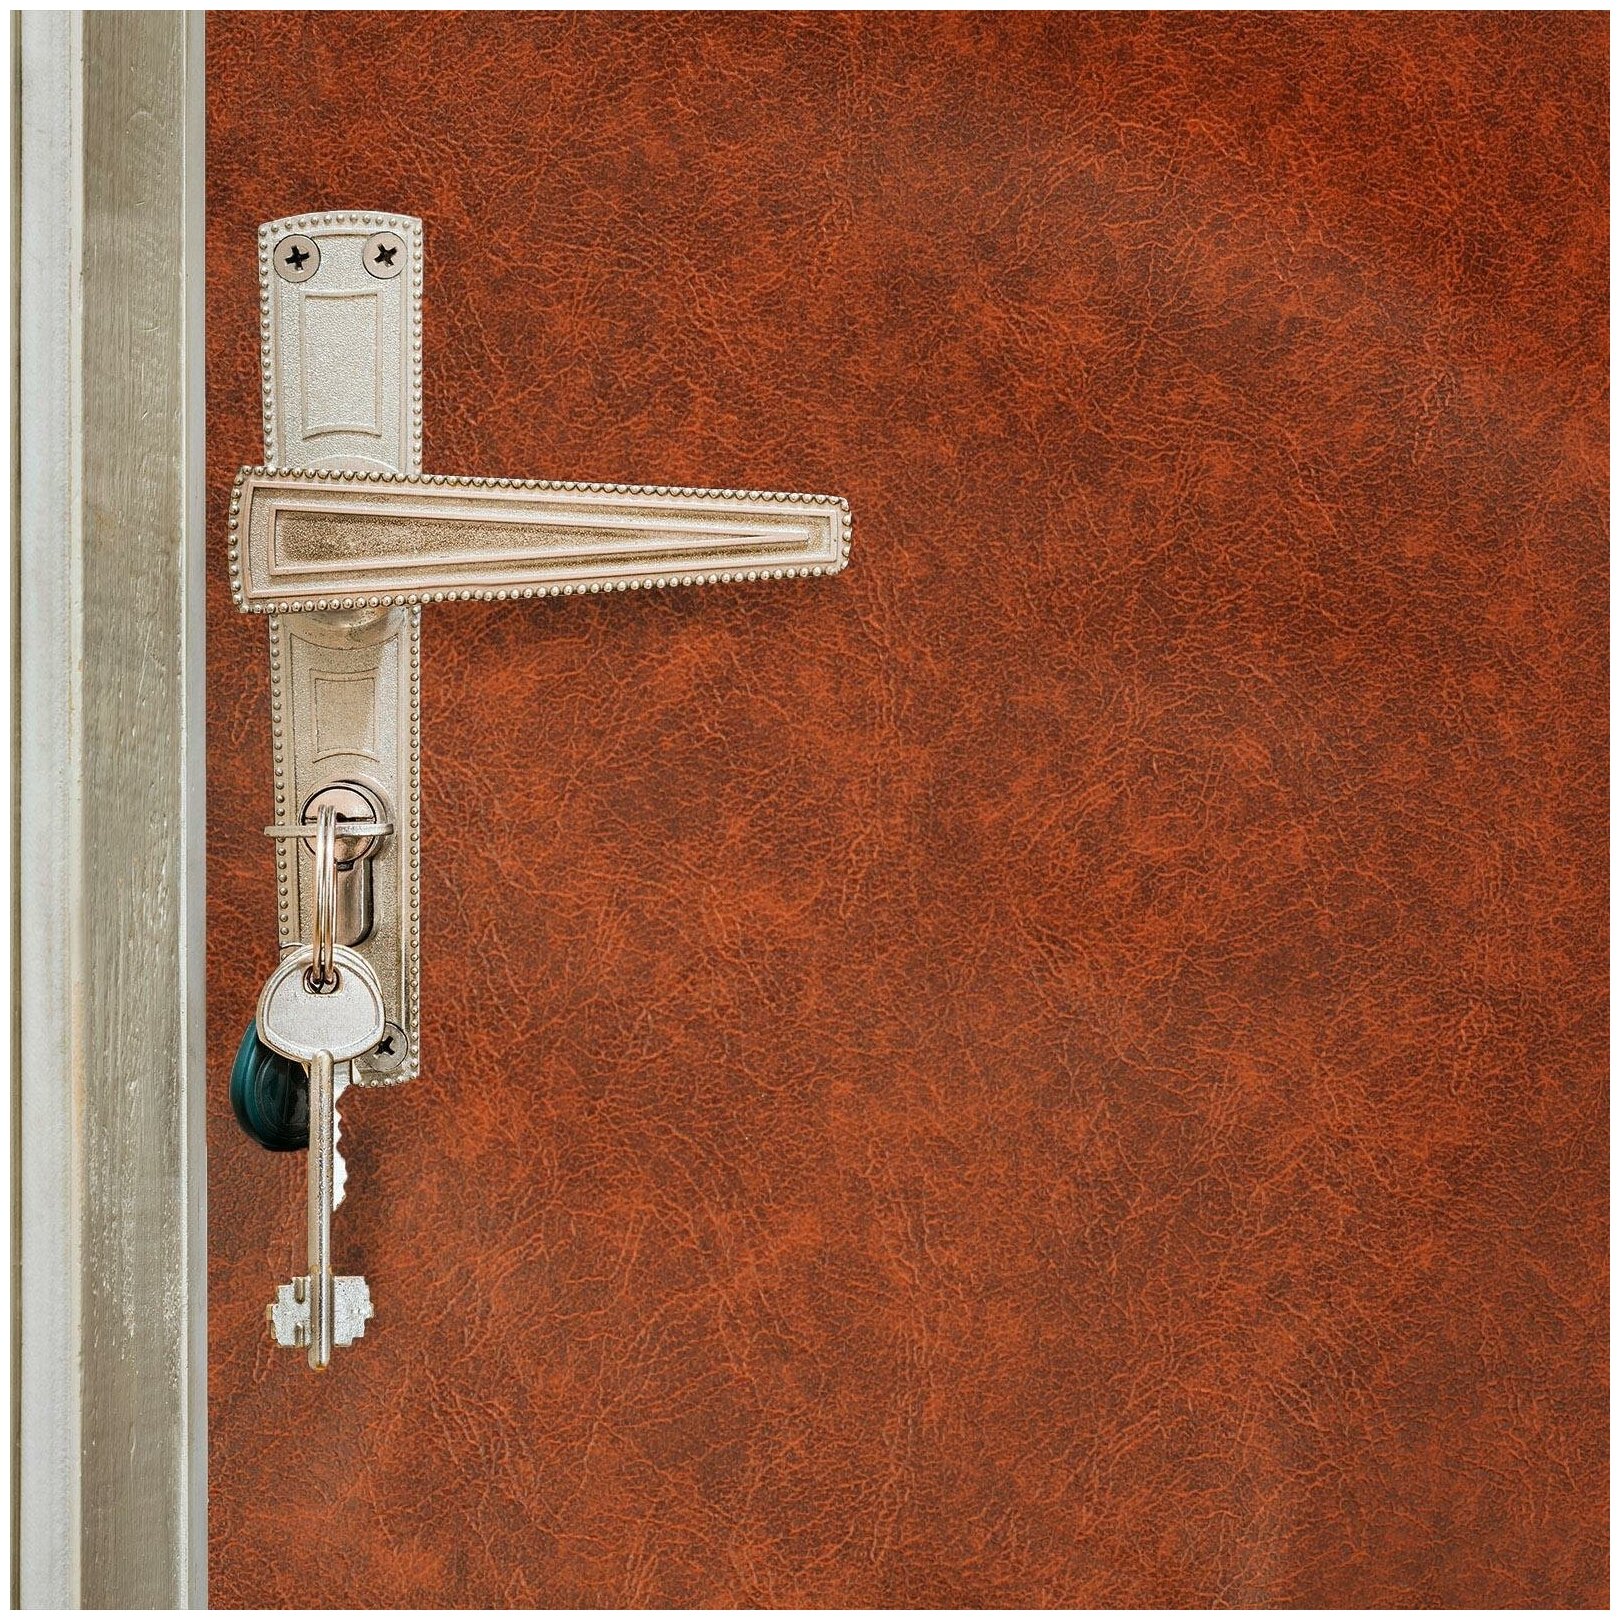 Комплект для обивки дверей 110 x 205 см: иск. кожа, поролон 5 мм, гвозди, струна, рыжий, "Рулон"